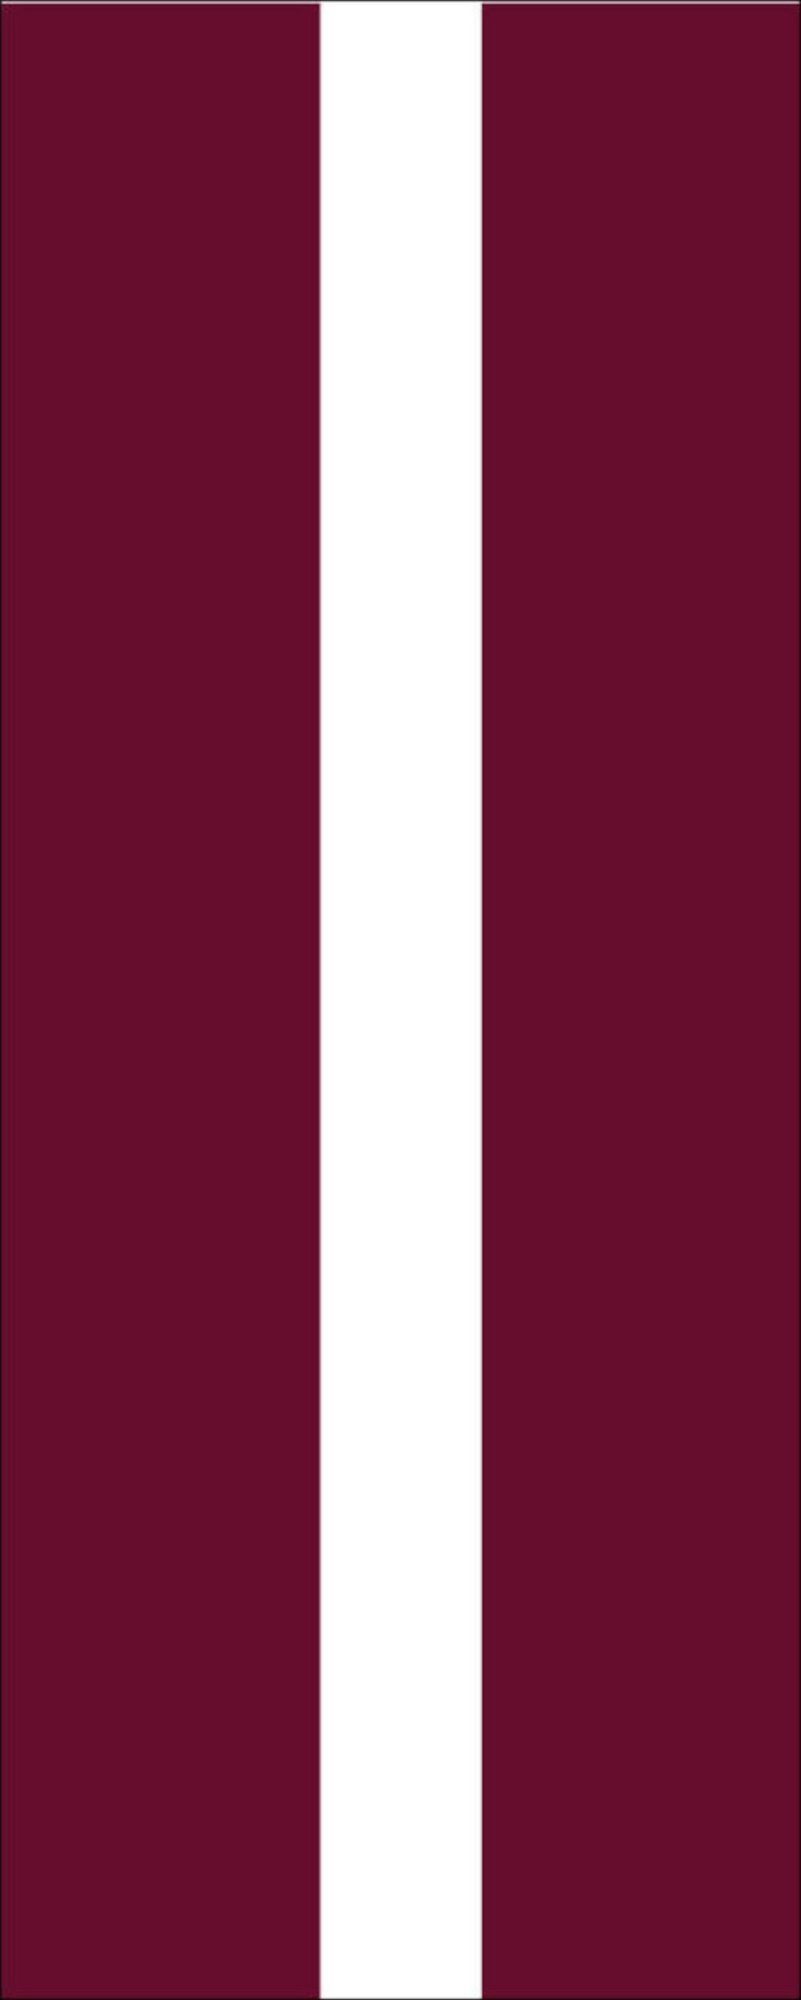 160 Hochformat flaggenmeer g/m² Lettland Flagge